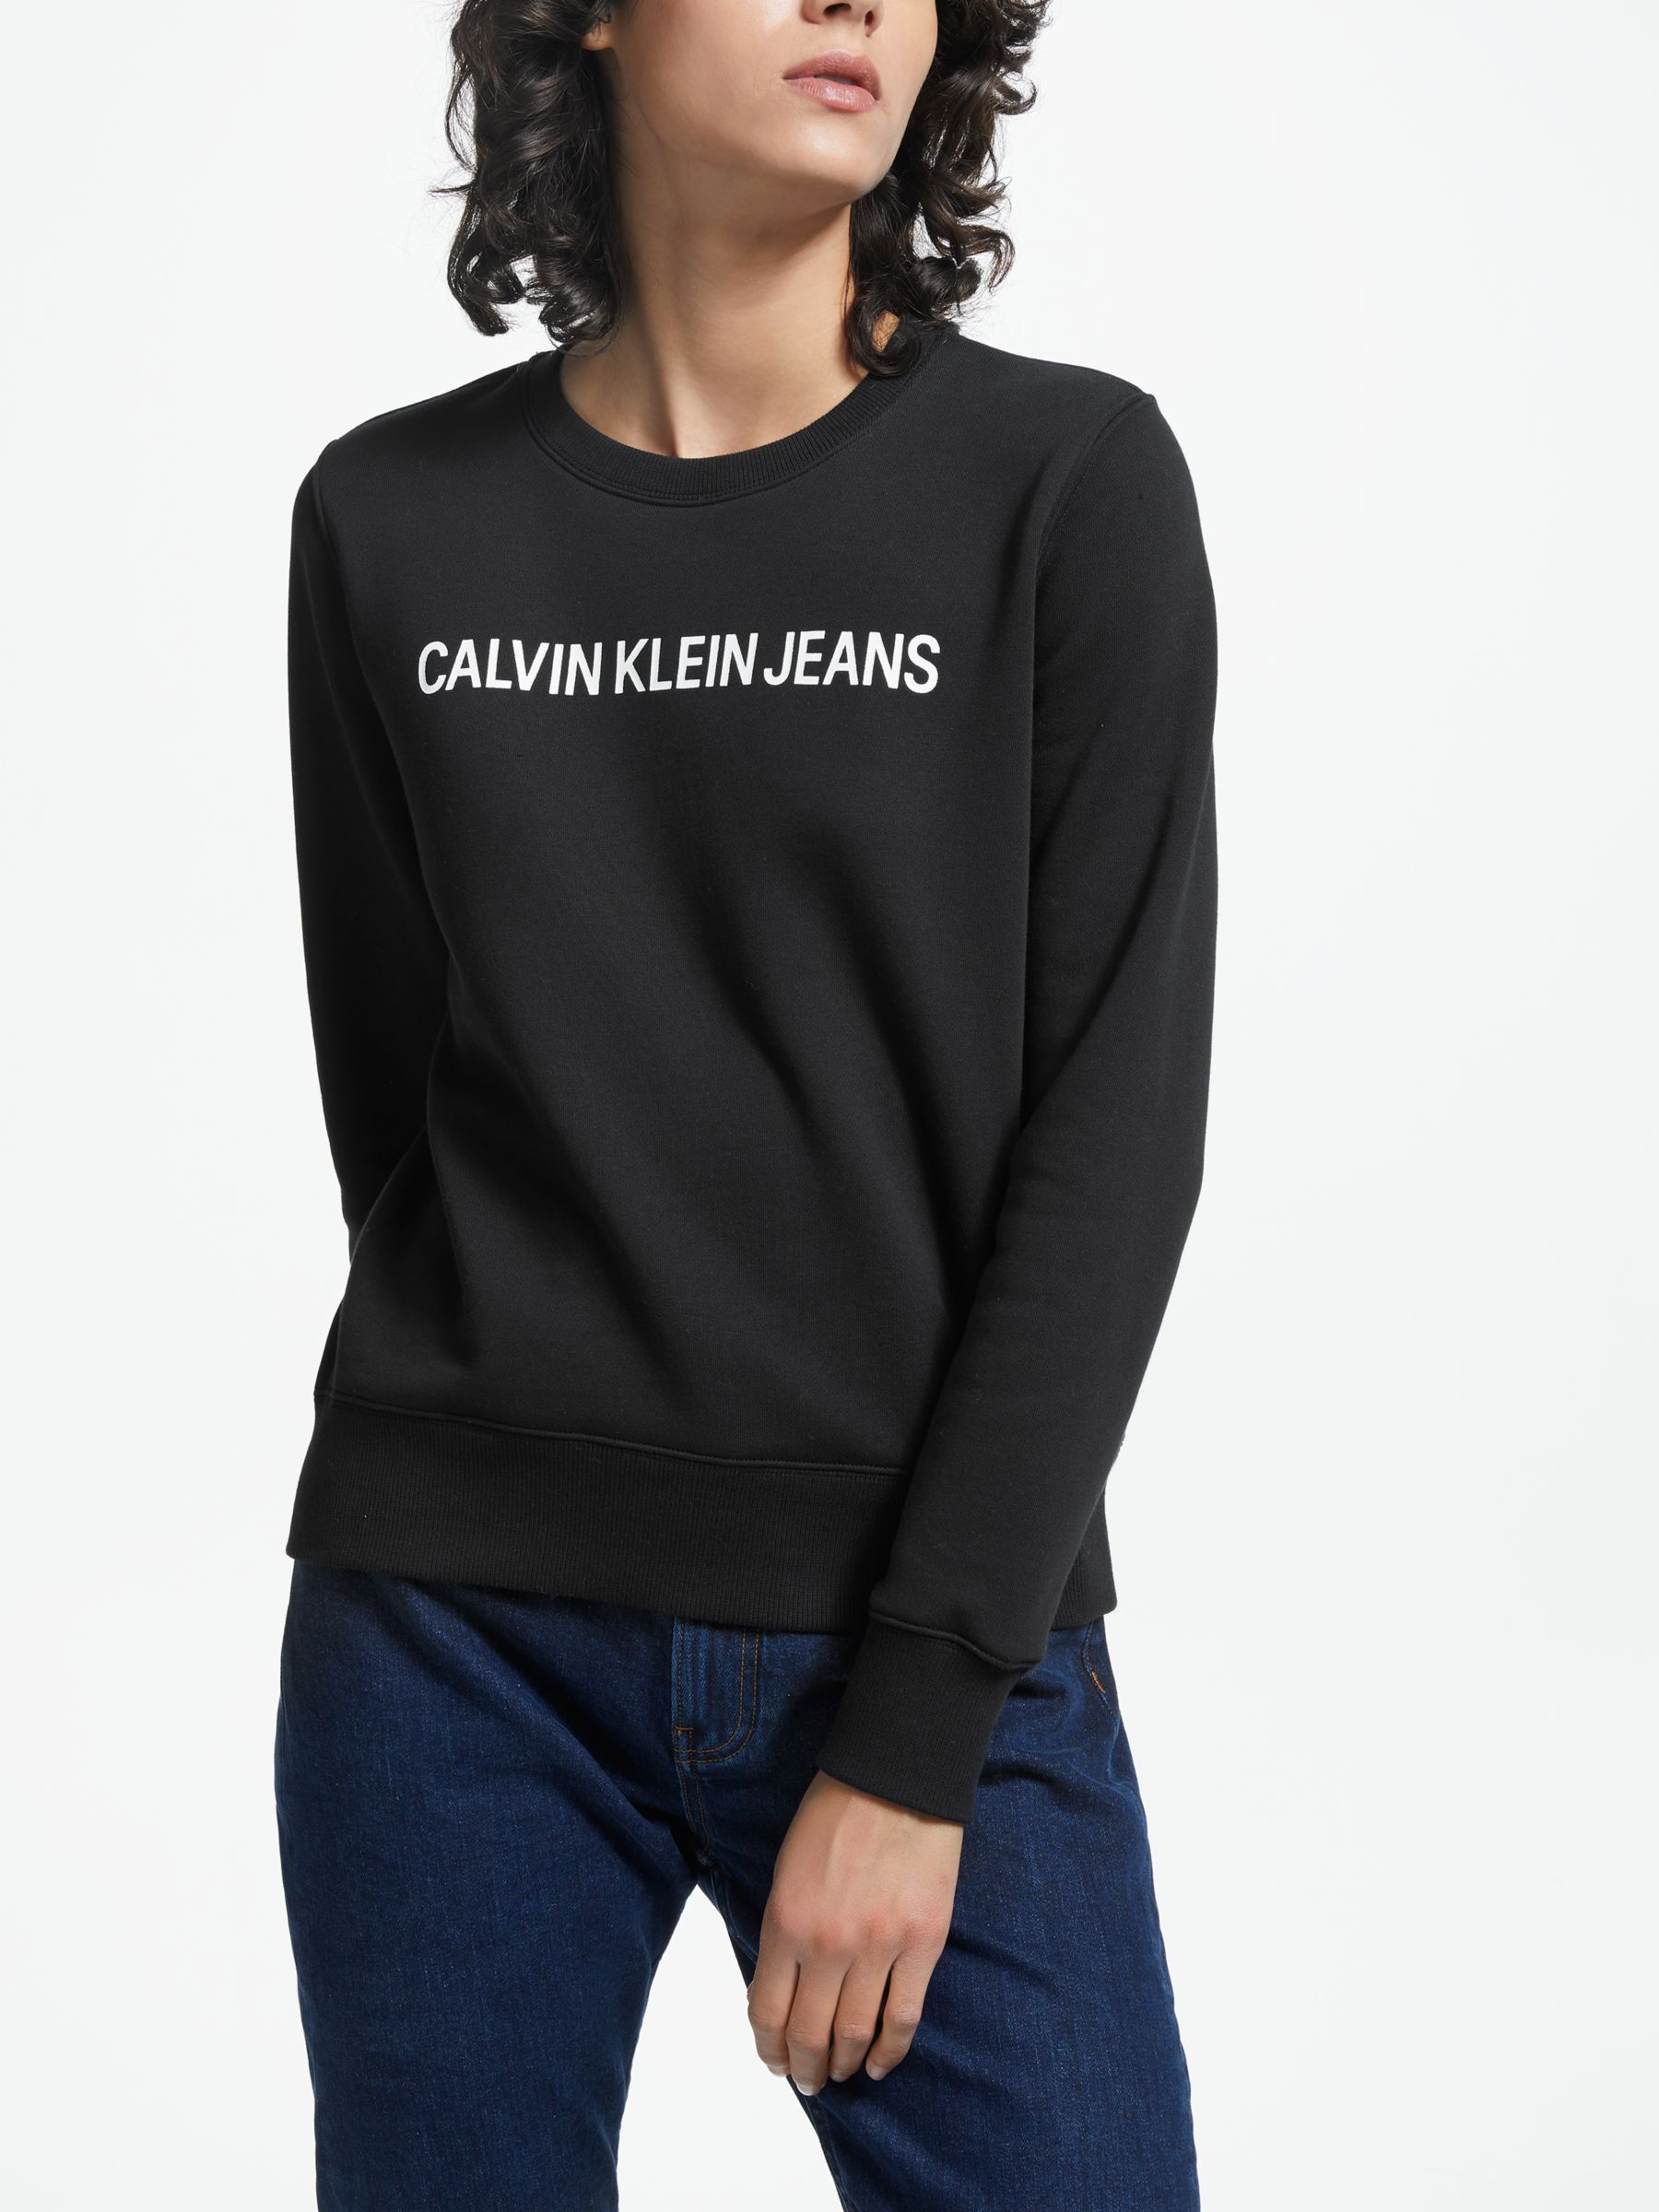 calvin klein jeans black jumper